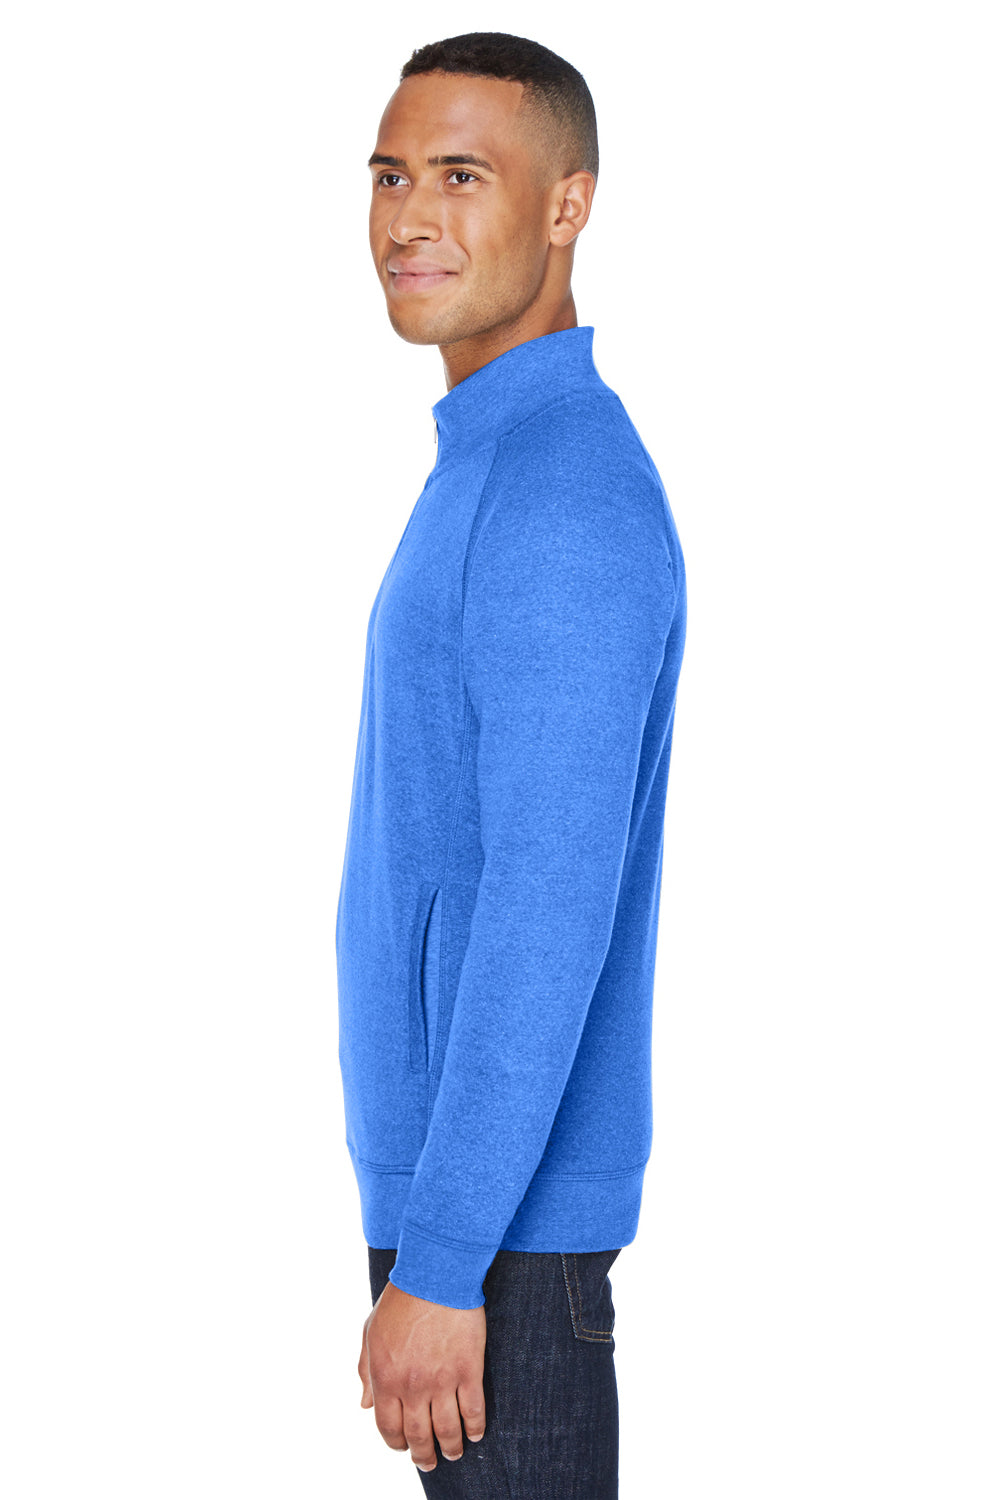 J America JA8869 Mens Fleece 1/4 Zip Sweatshirt Royal Blue Side